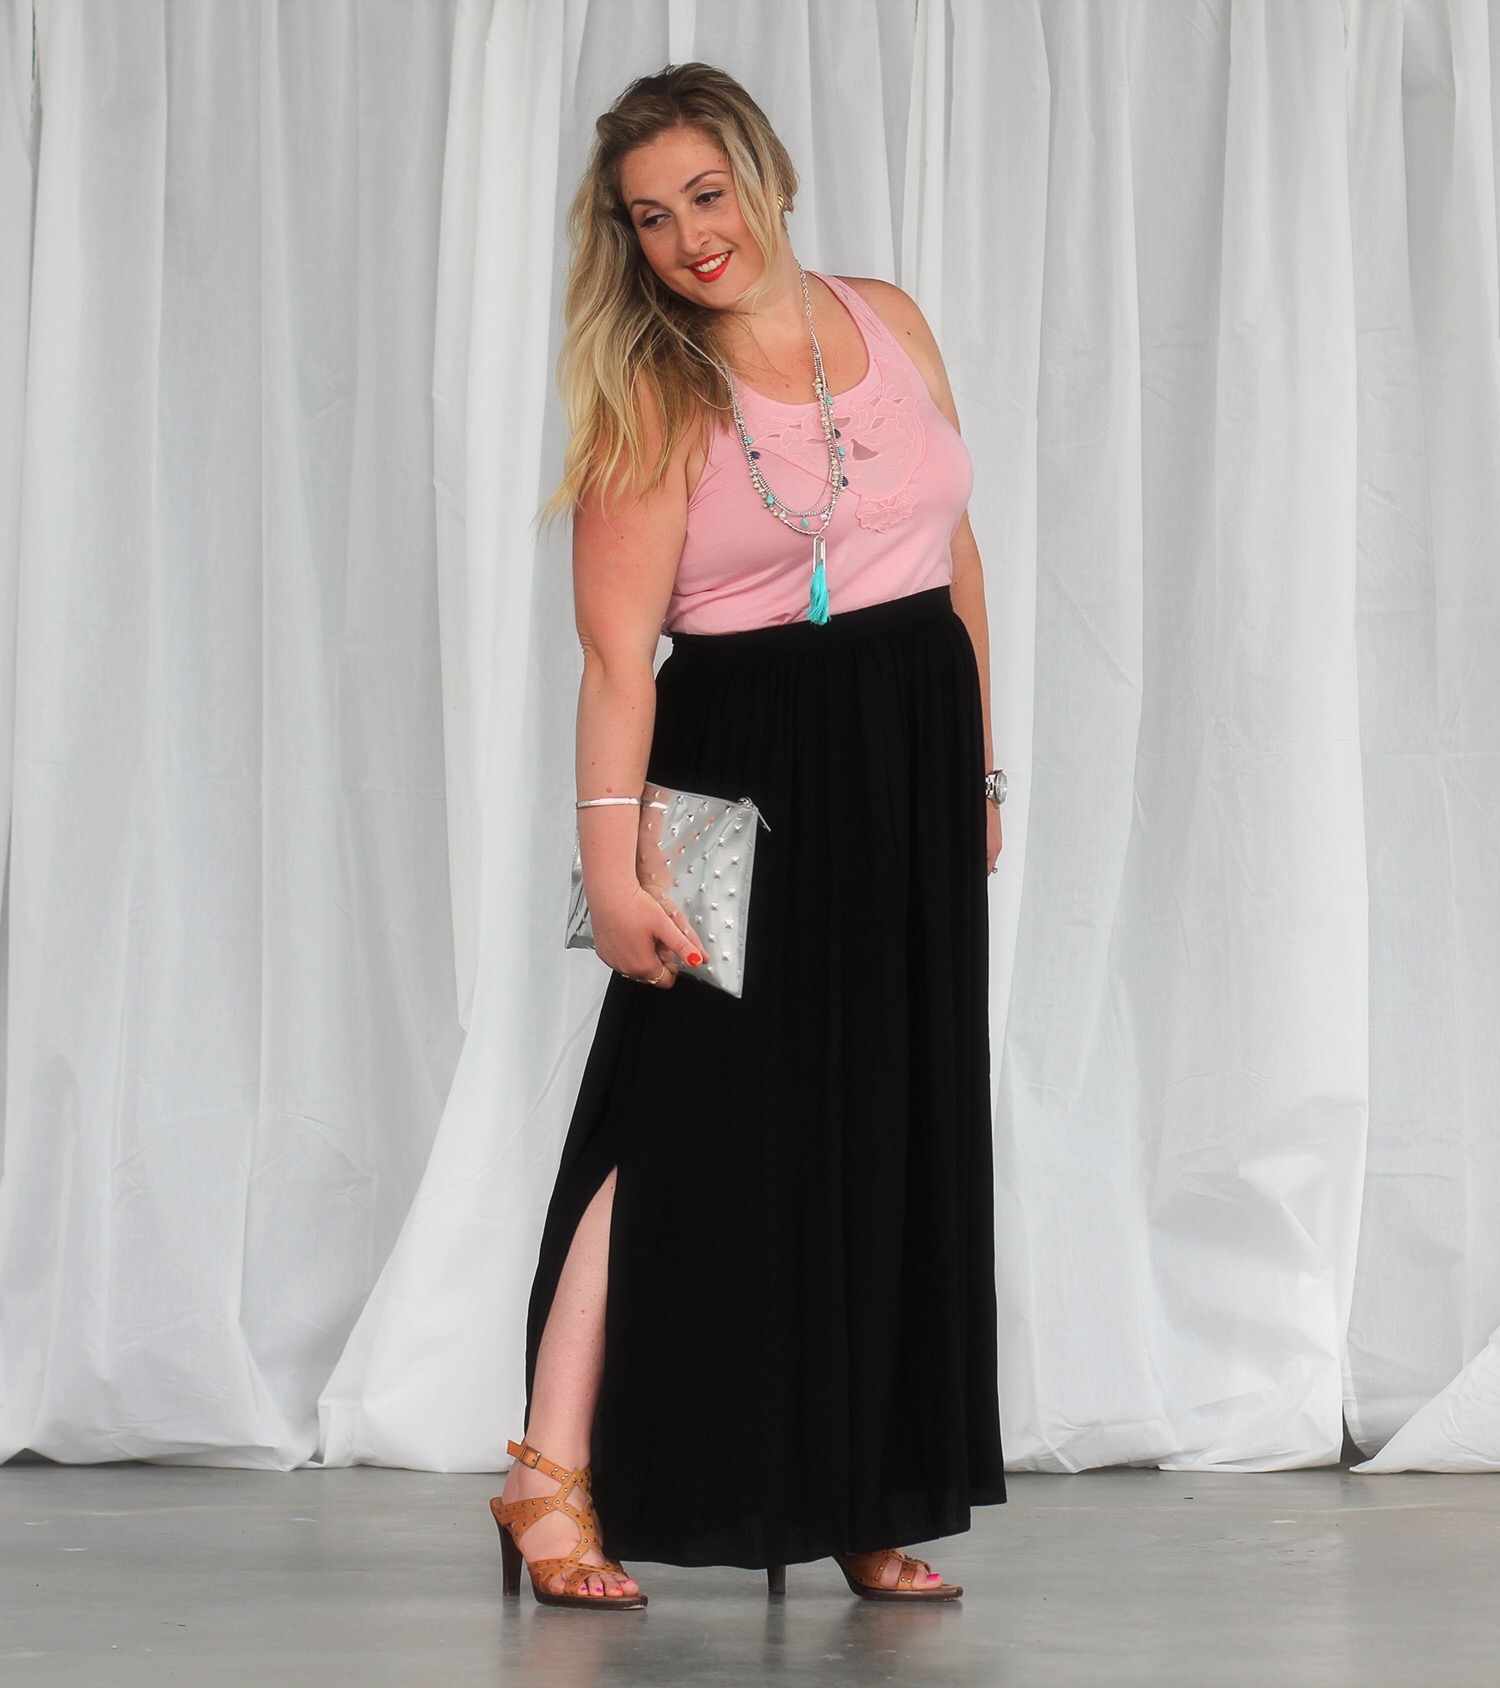 Addition Elle Plus Size Fashion Ottawa Fashion blog mode XLusive Chantsy Chantal Sarkisian